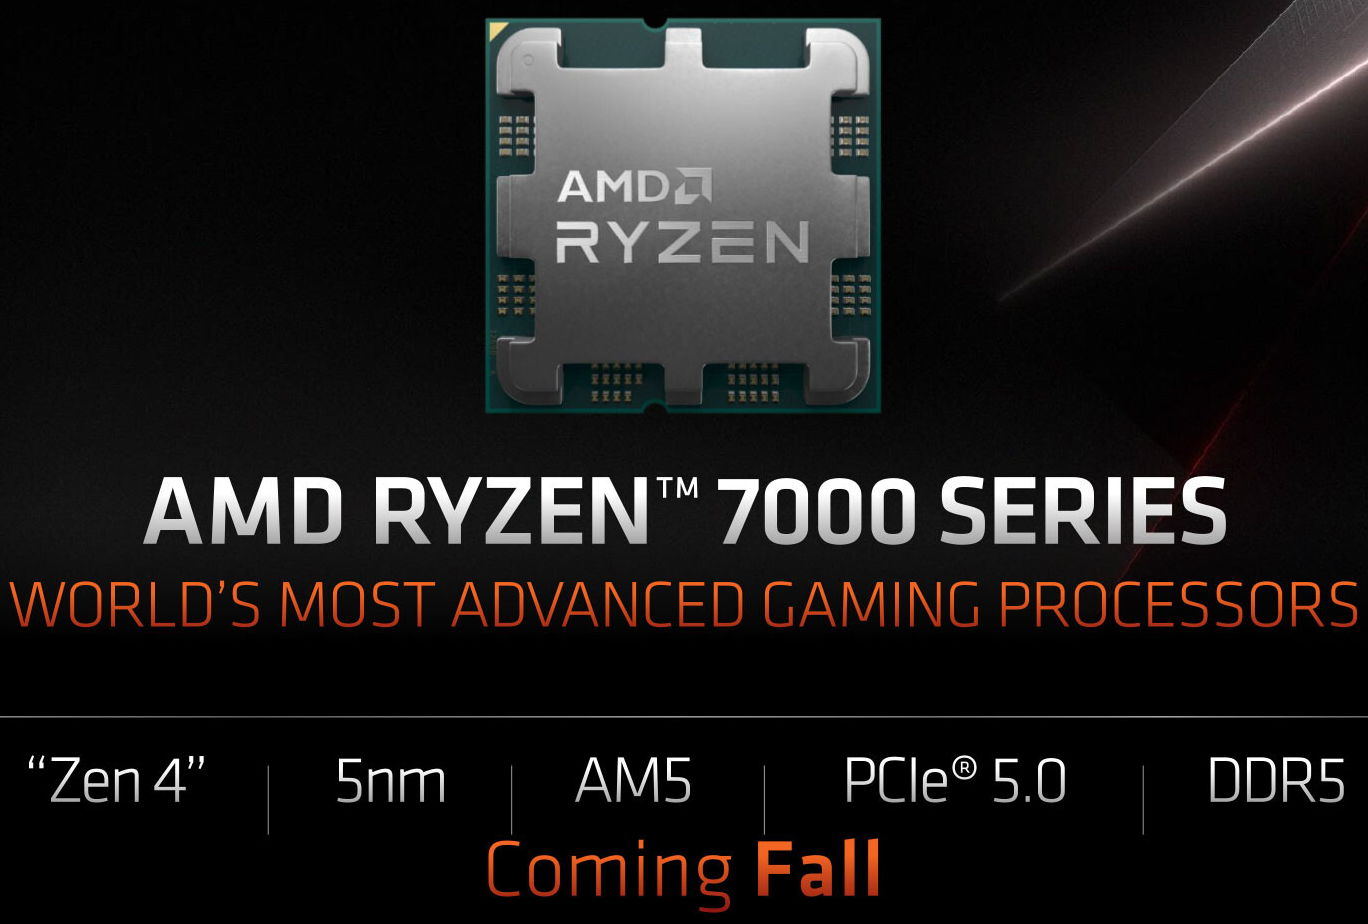 Introducing AMD Ryzen 7000